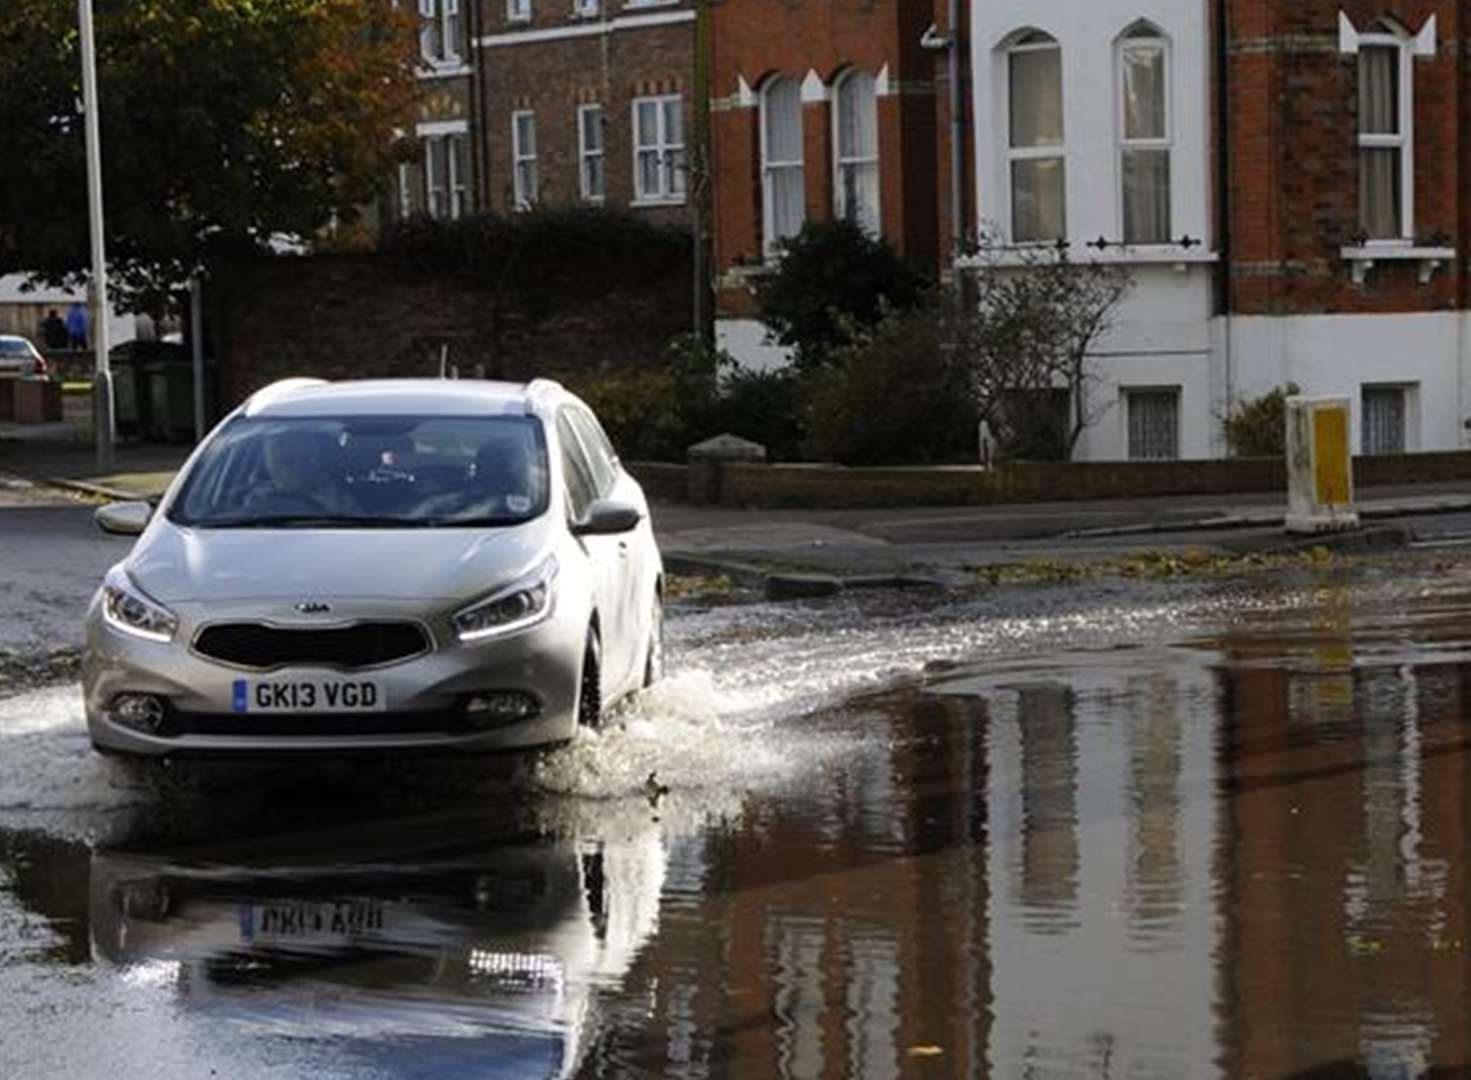 Flood warning as Kent braced for washout weekend